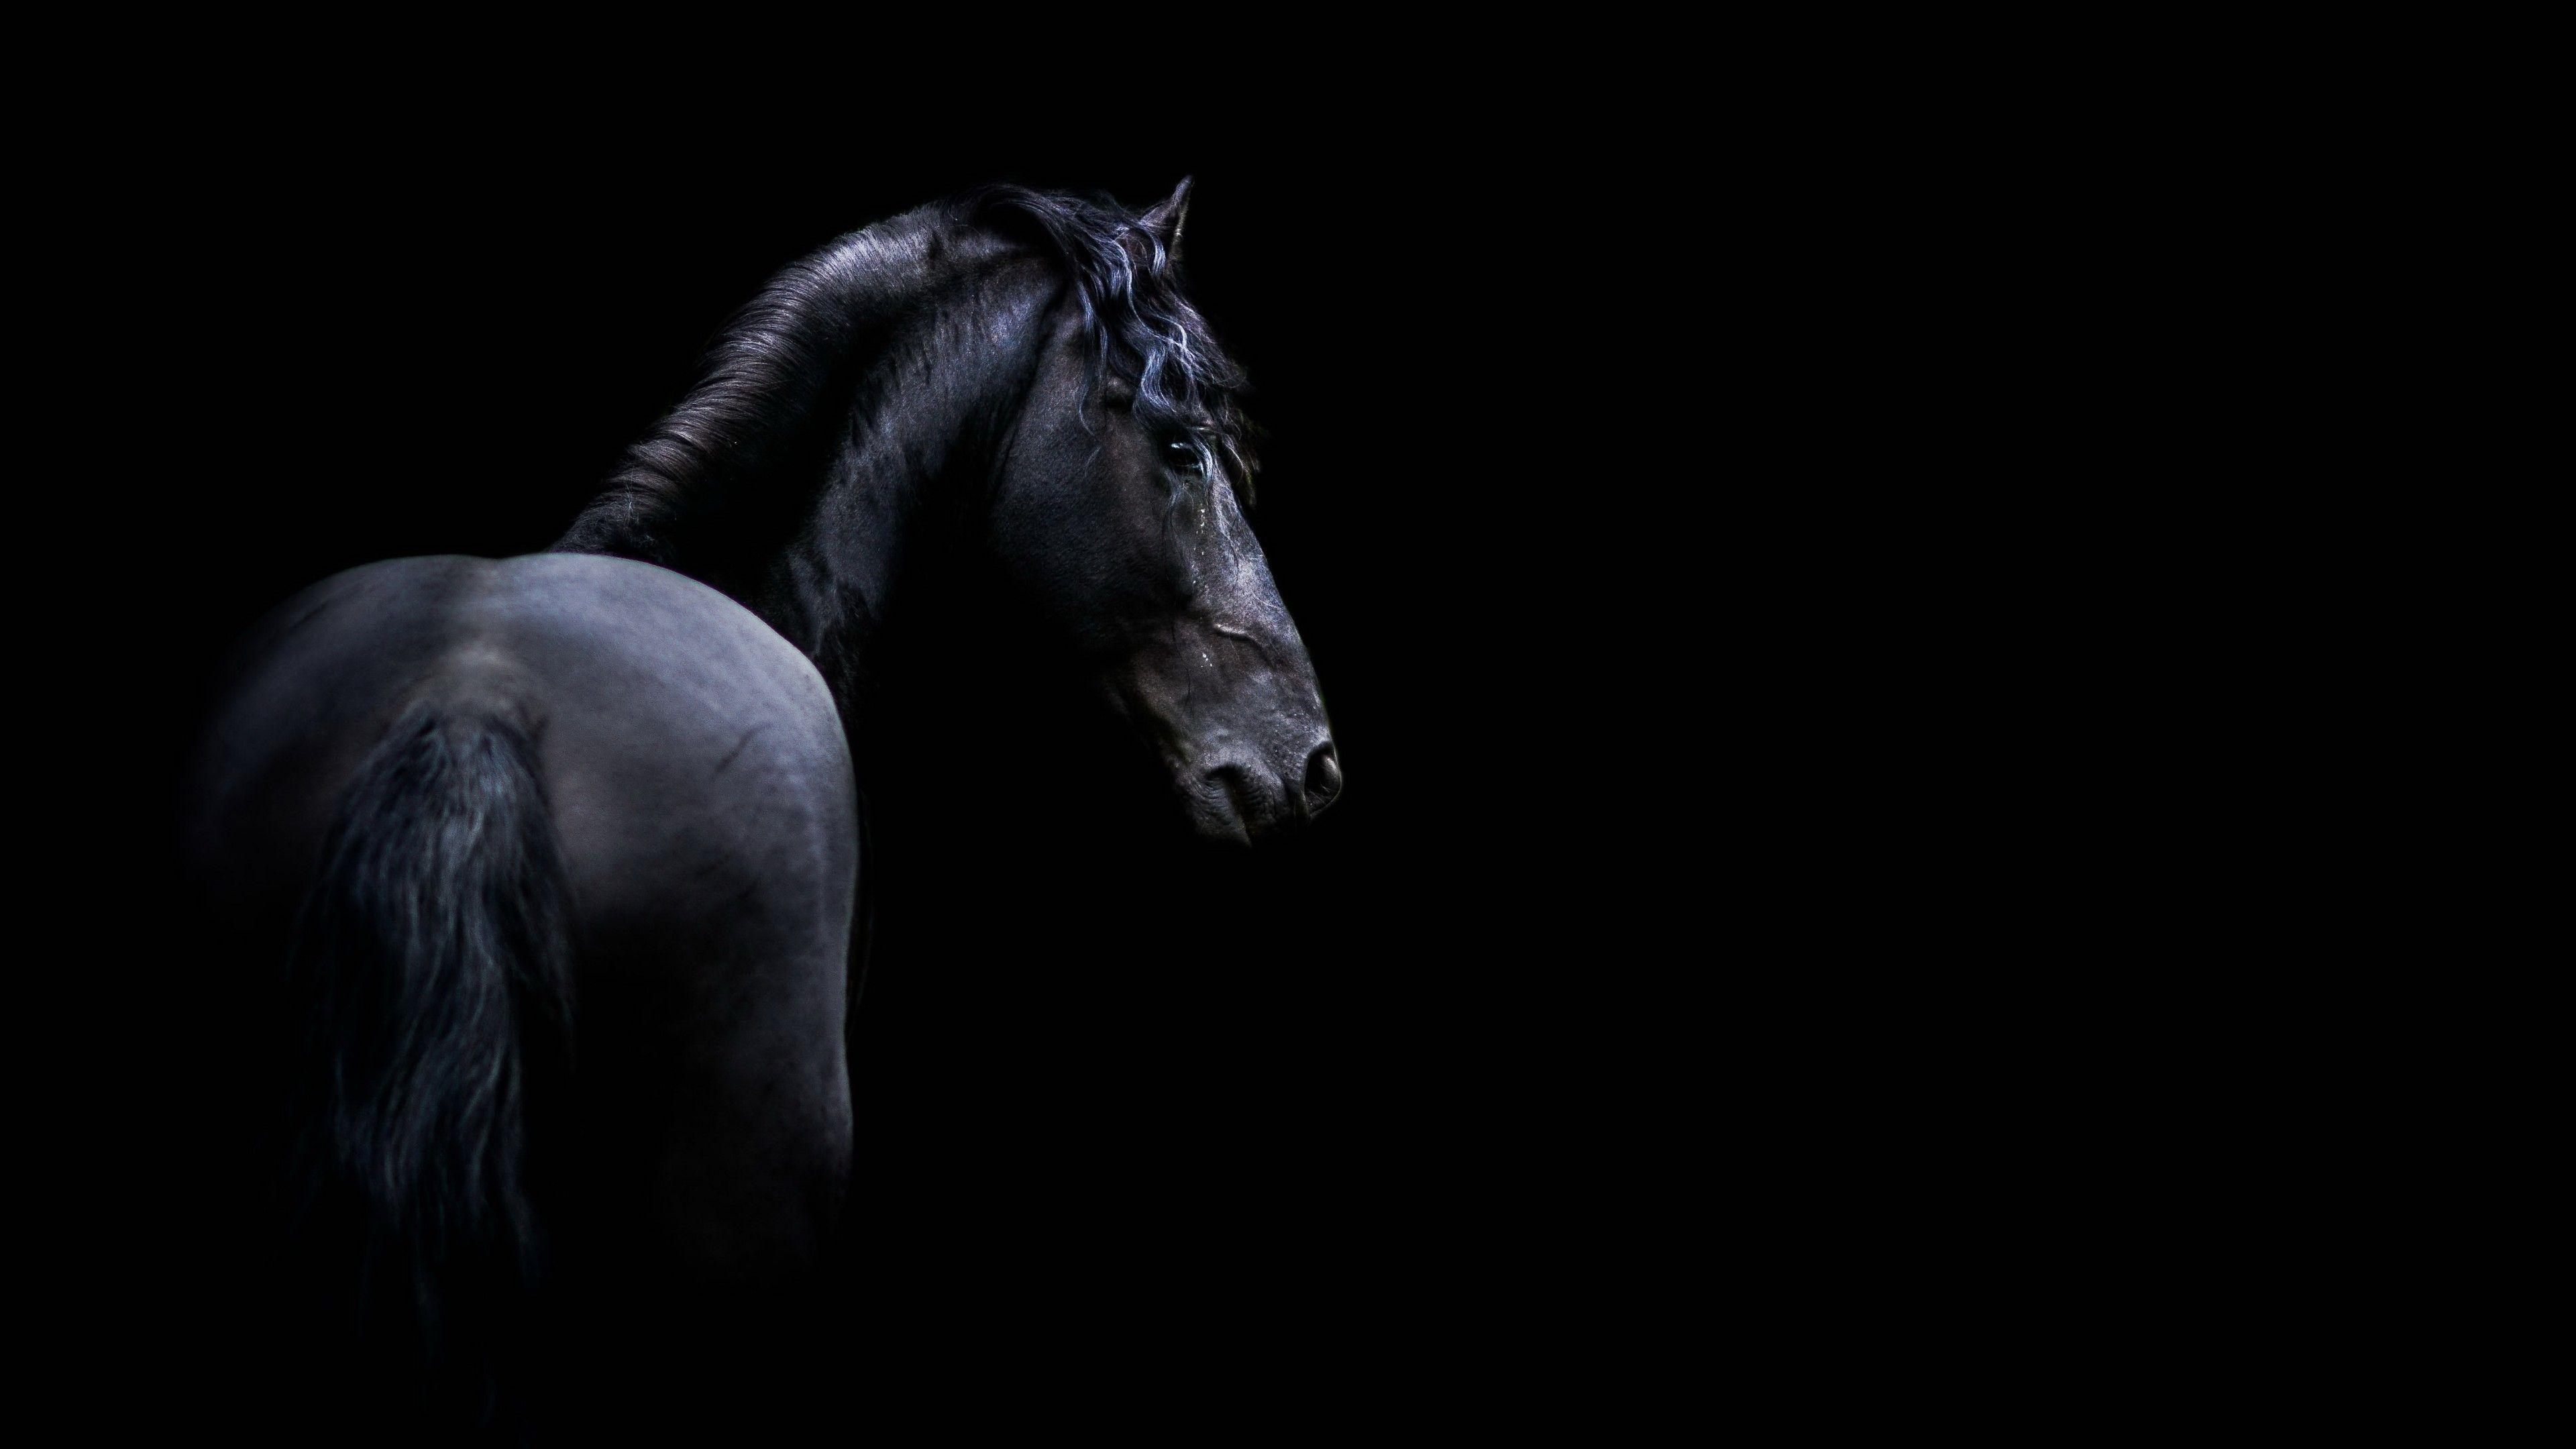 53,650 Black Horse Running Images, Stock Photos & Vectors | Shutterstock